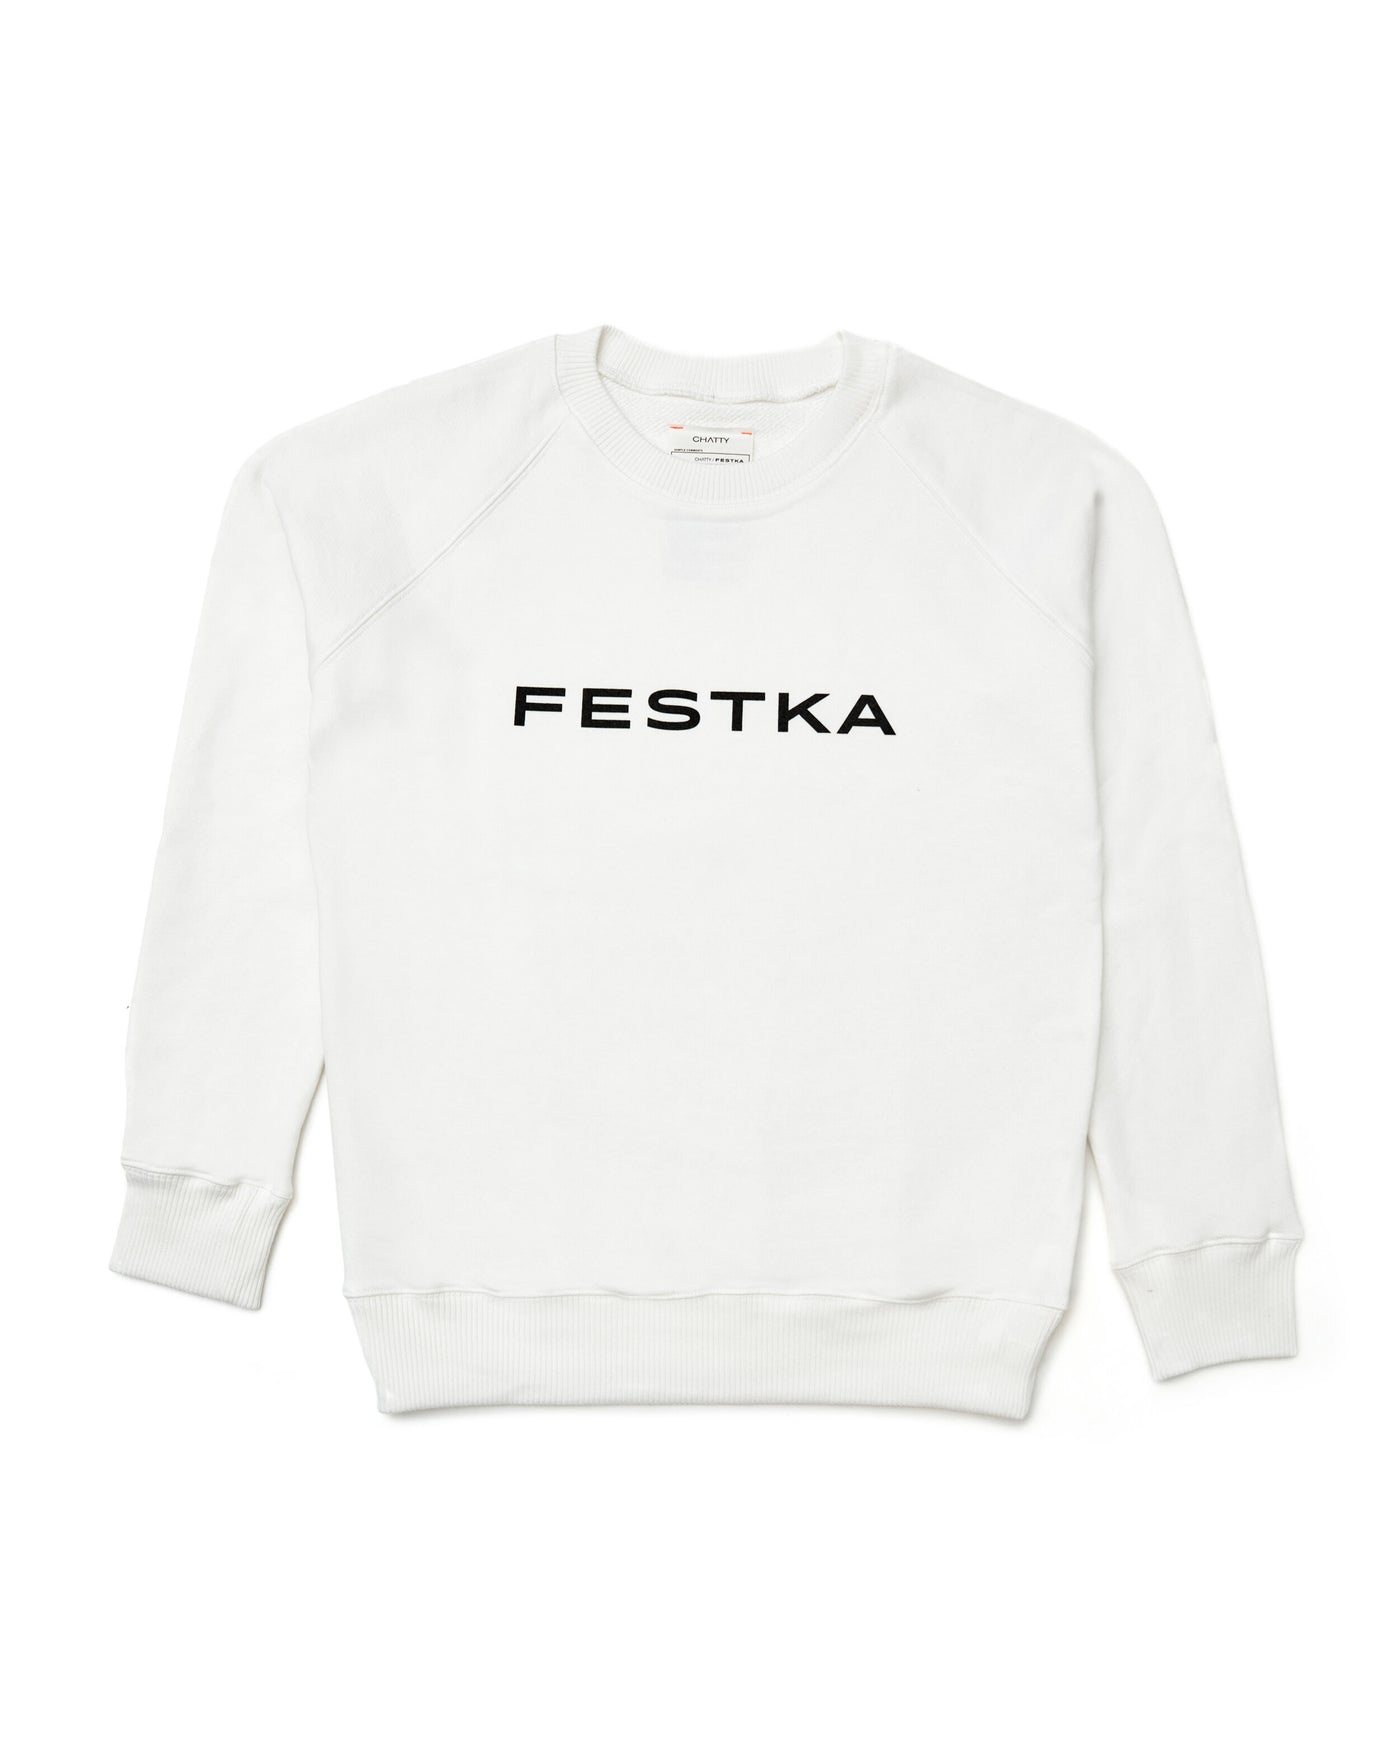 Festka x CHATTY sweatshirt WHITE